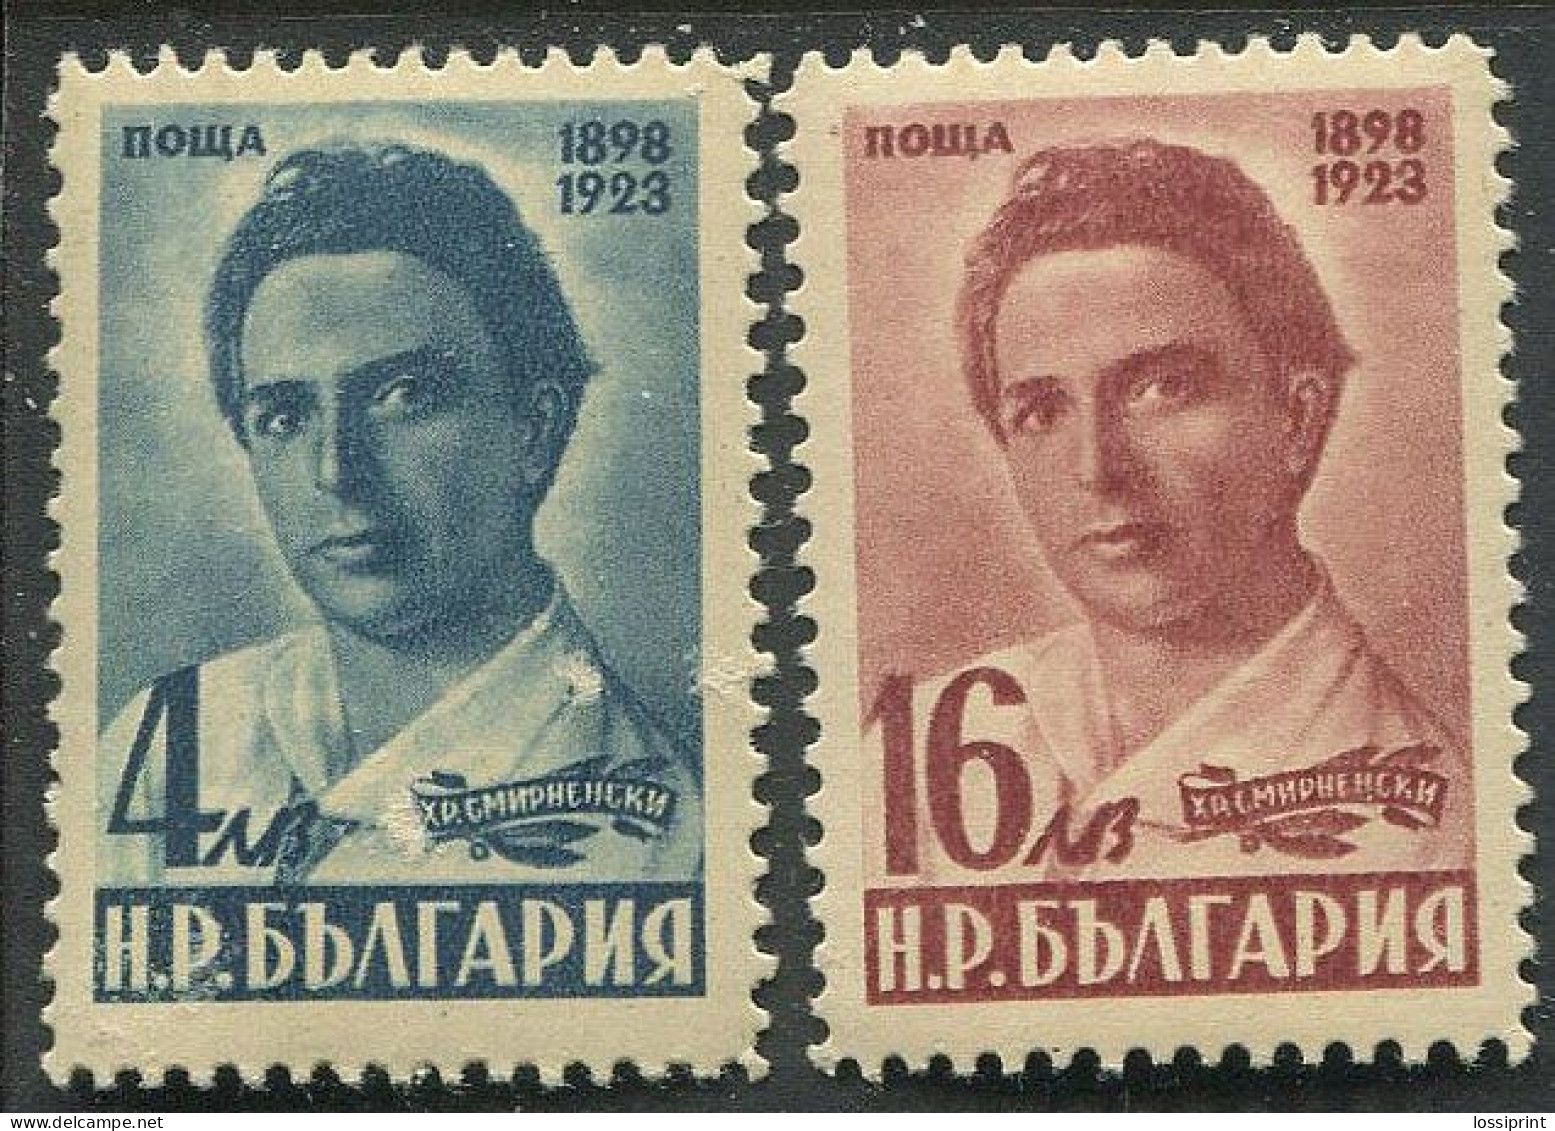 Bulgaria:Unused Stamps Serie H.R.Smirnenski, 1948, MNH - Nuovi